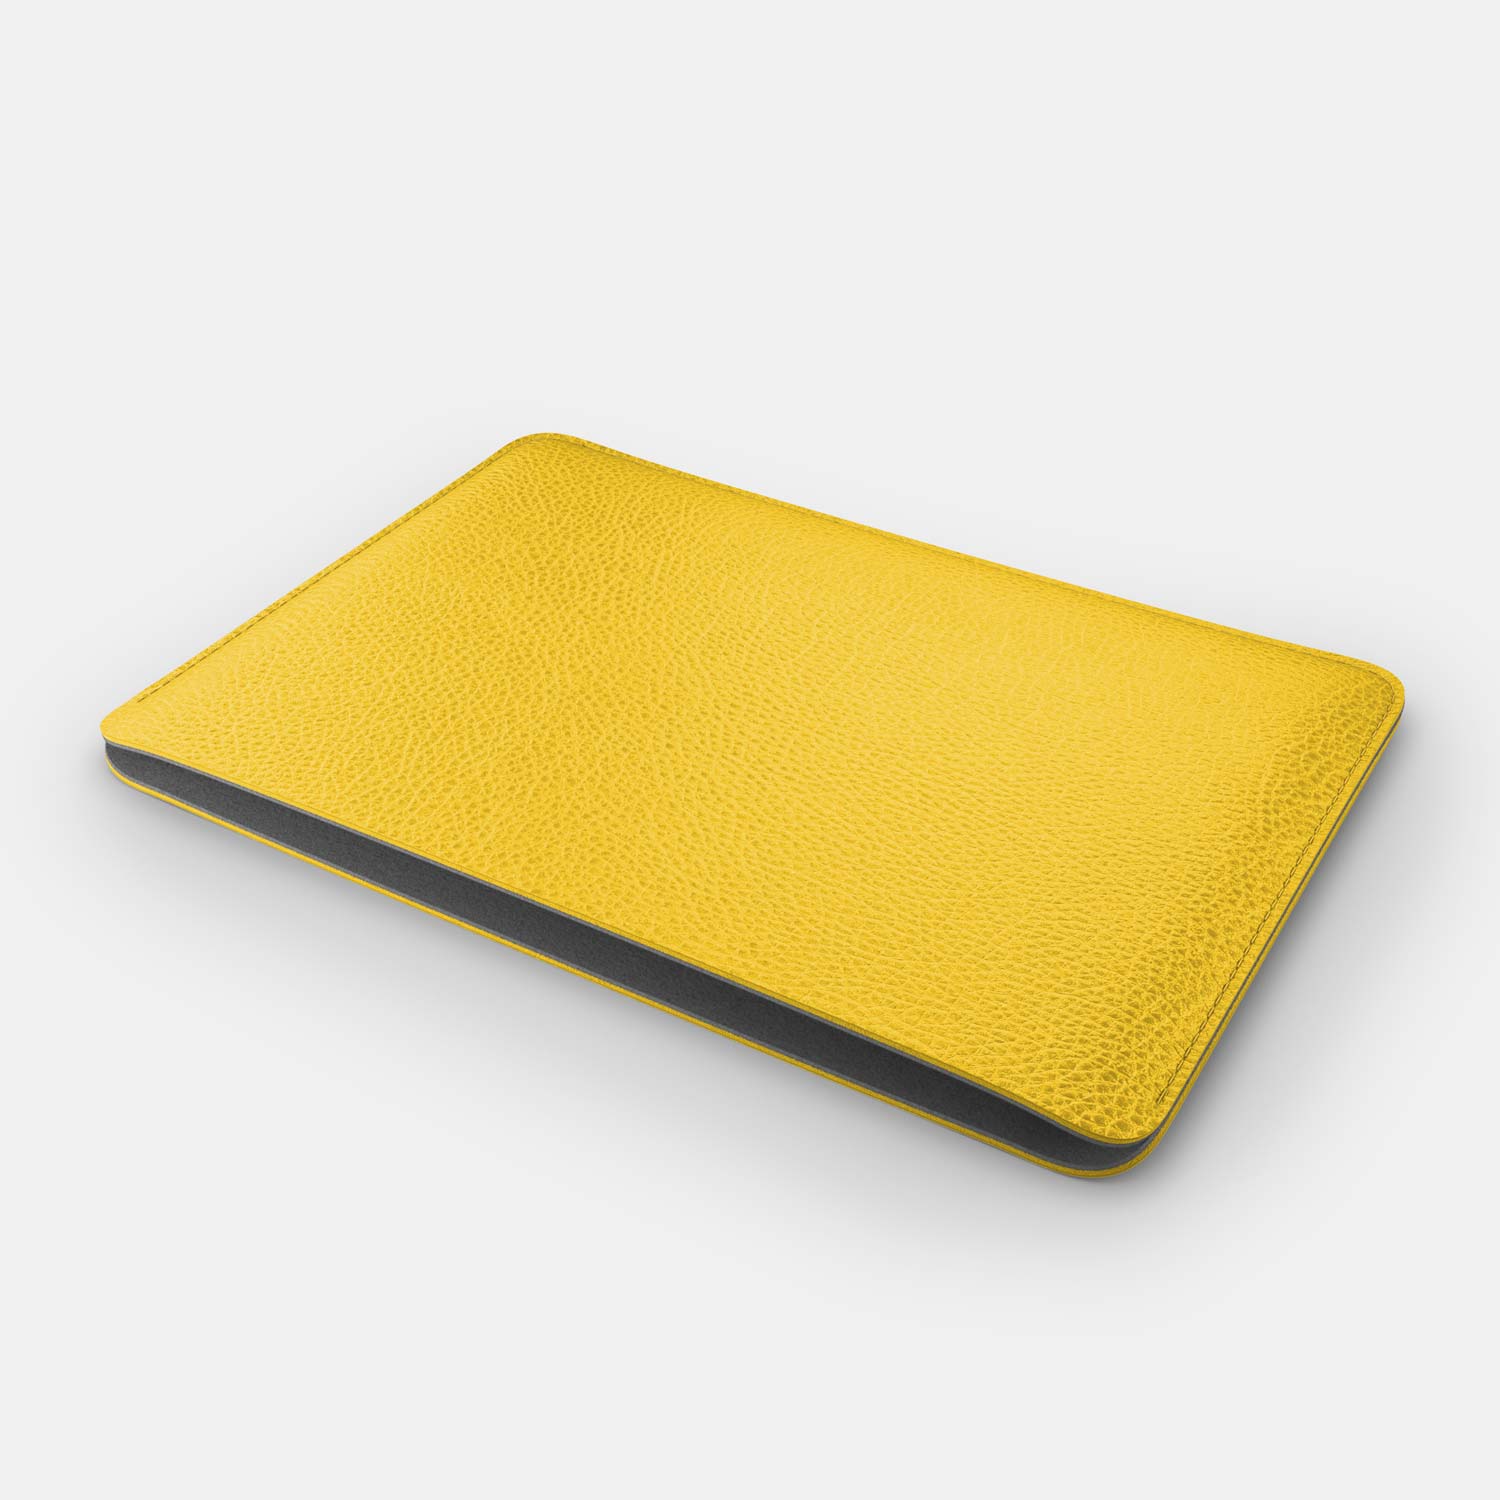 Leather iPad Sleeve - Orange and Beige - RYAN London